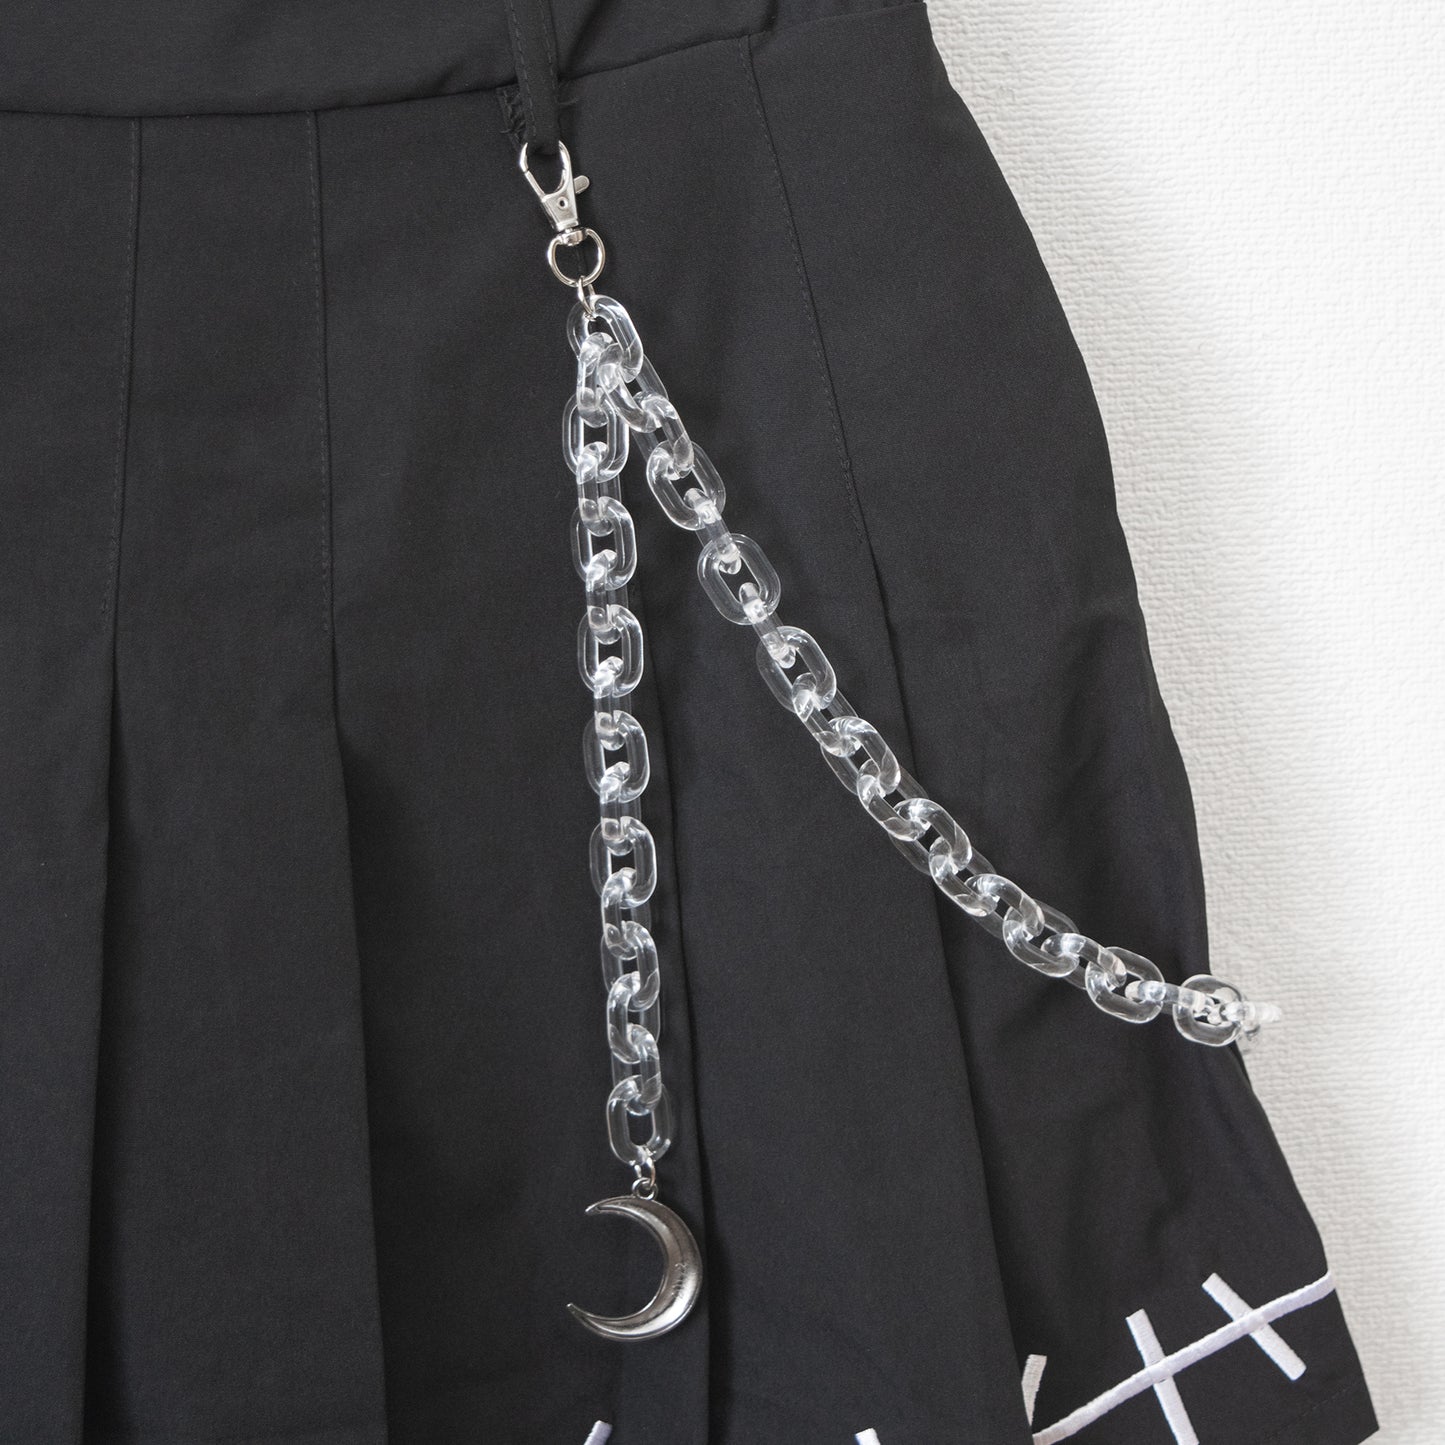 ACDC RAG Moon Bunny Dolls Mini Pleated Skirt BLACK